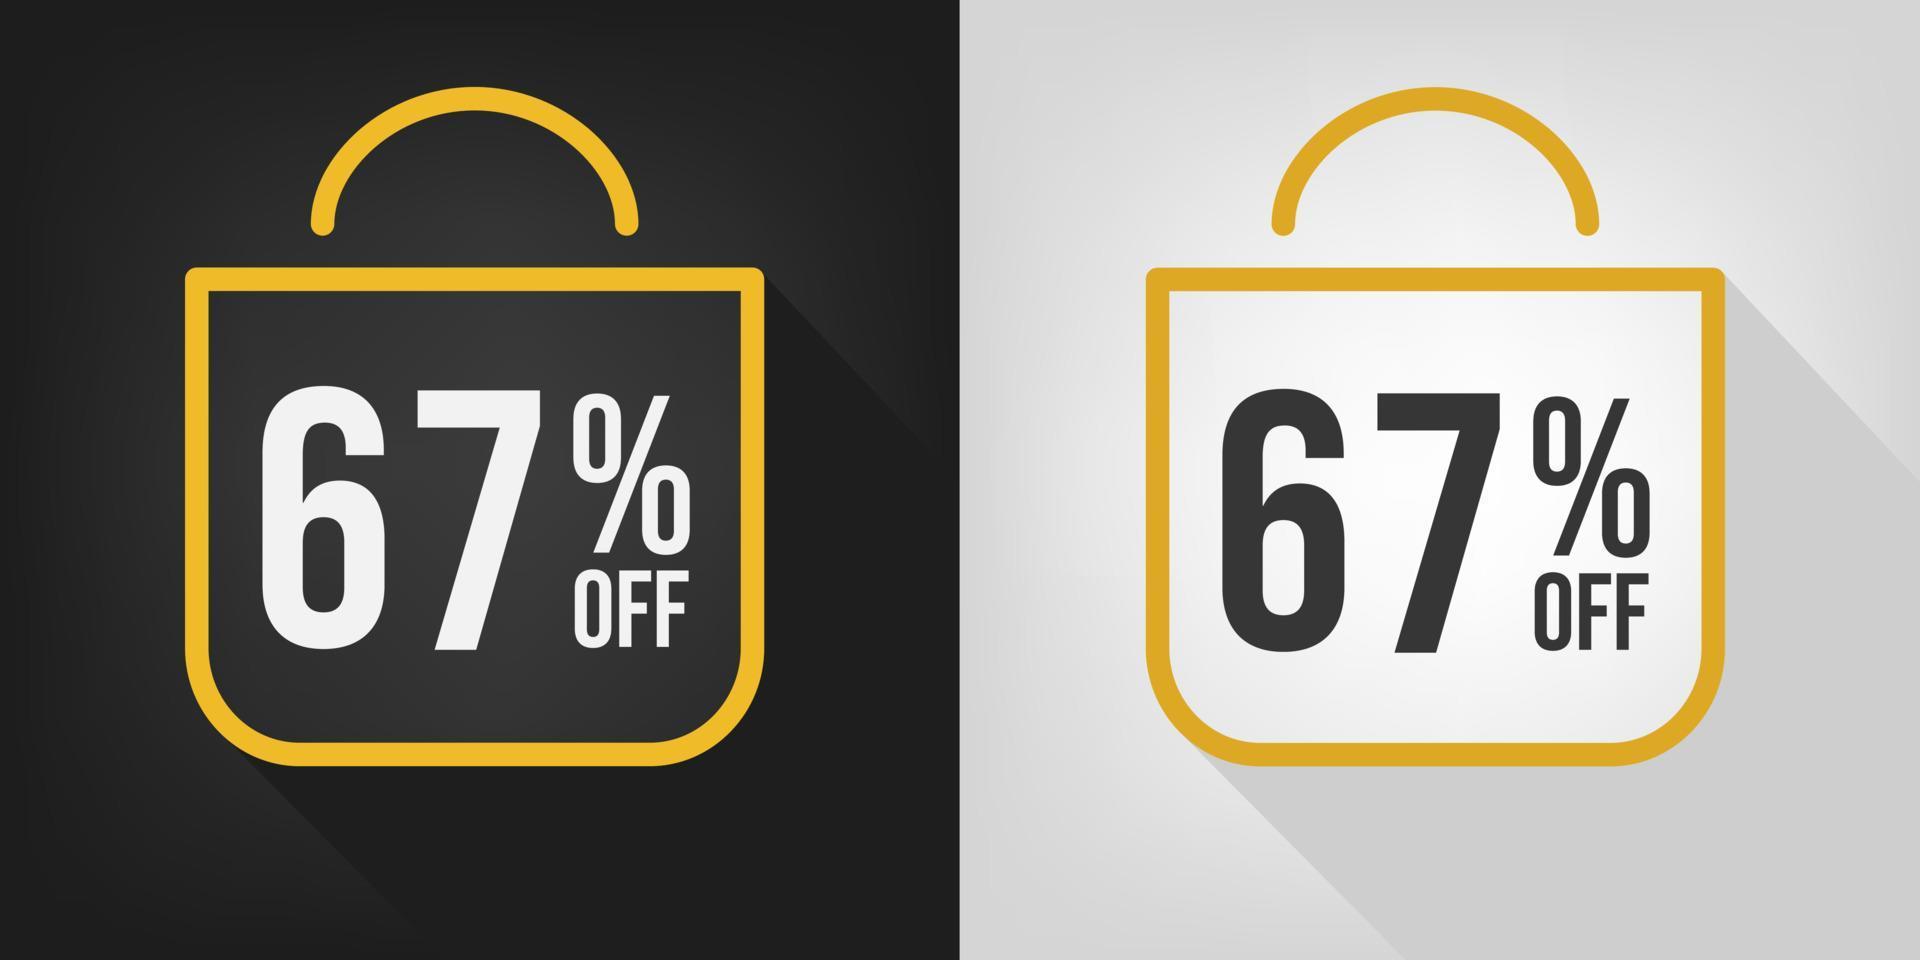 67% de desconto. faixa preta, branca e amarela com sessenta e sete por cento de desconto. vetor de conceito de sacola de compras.